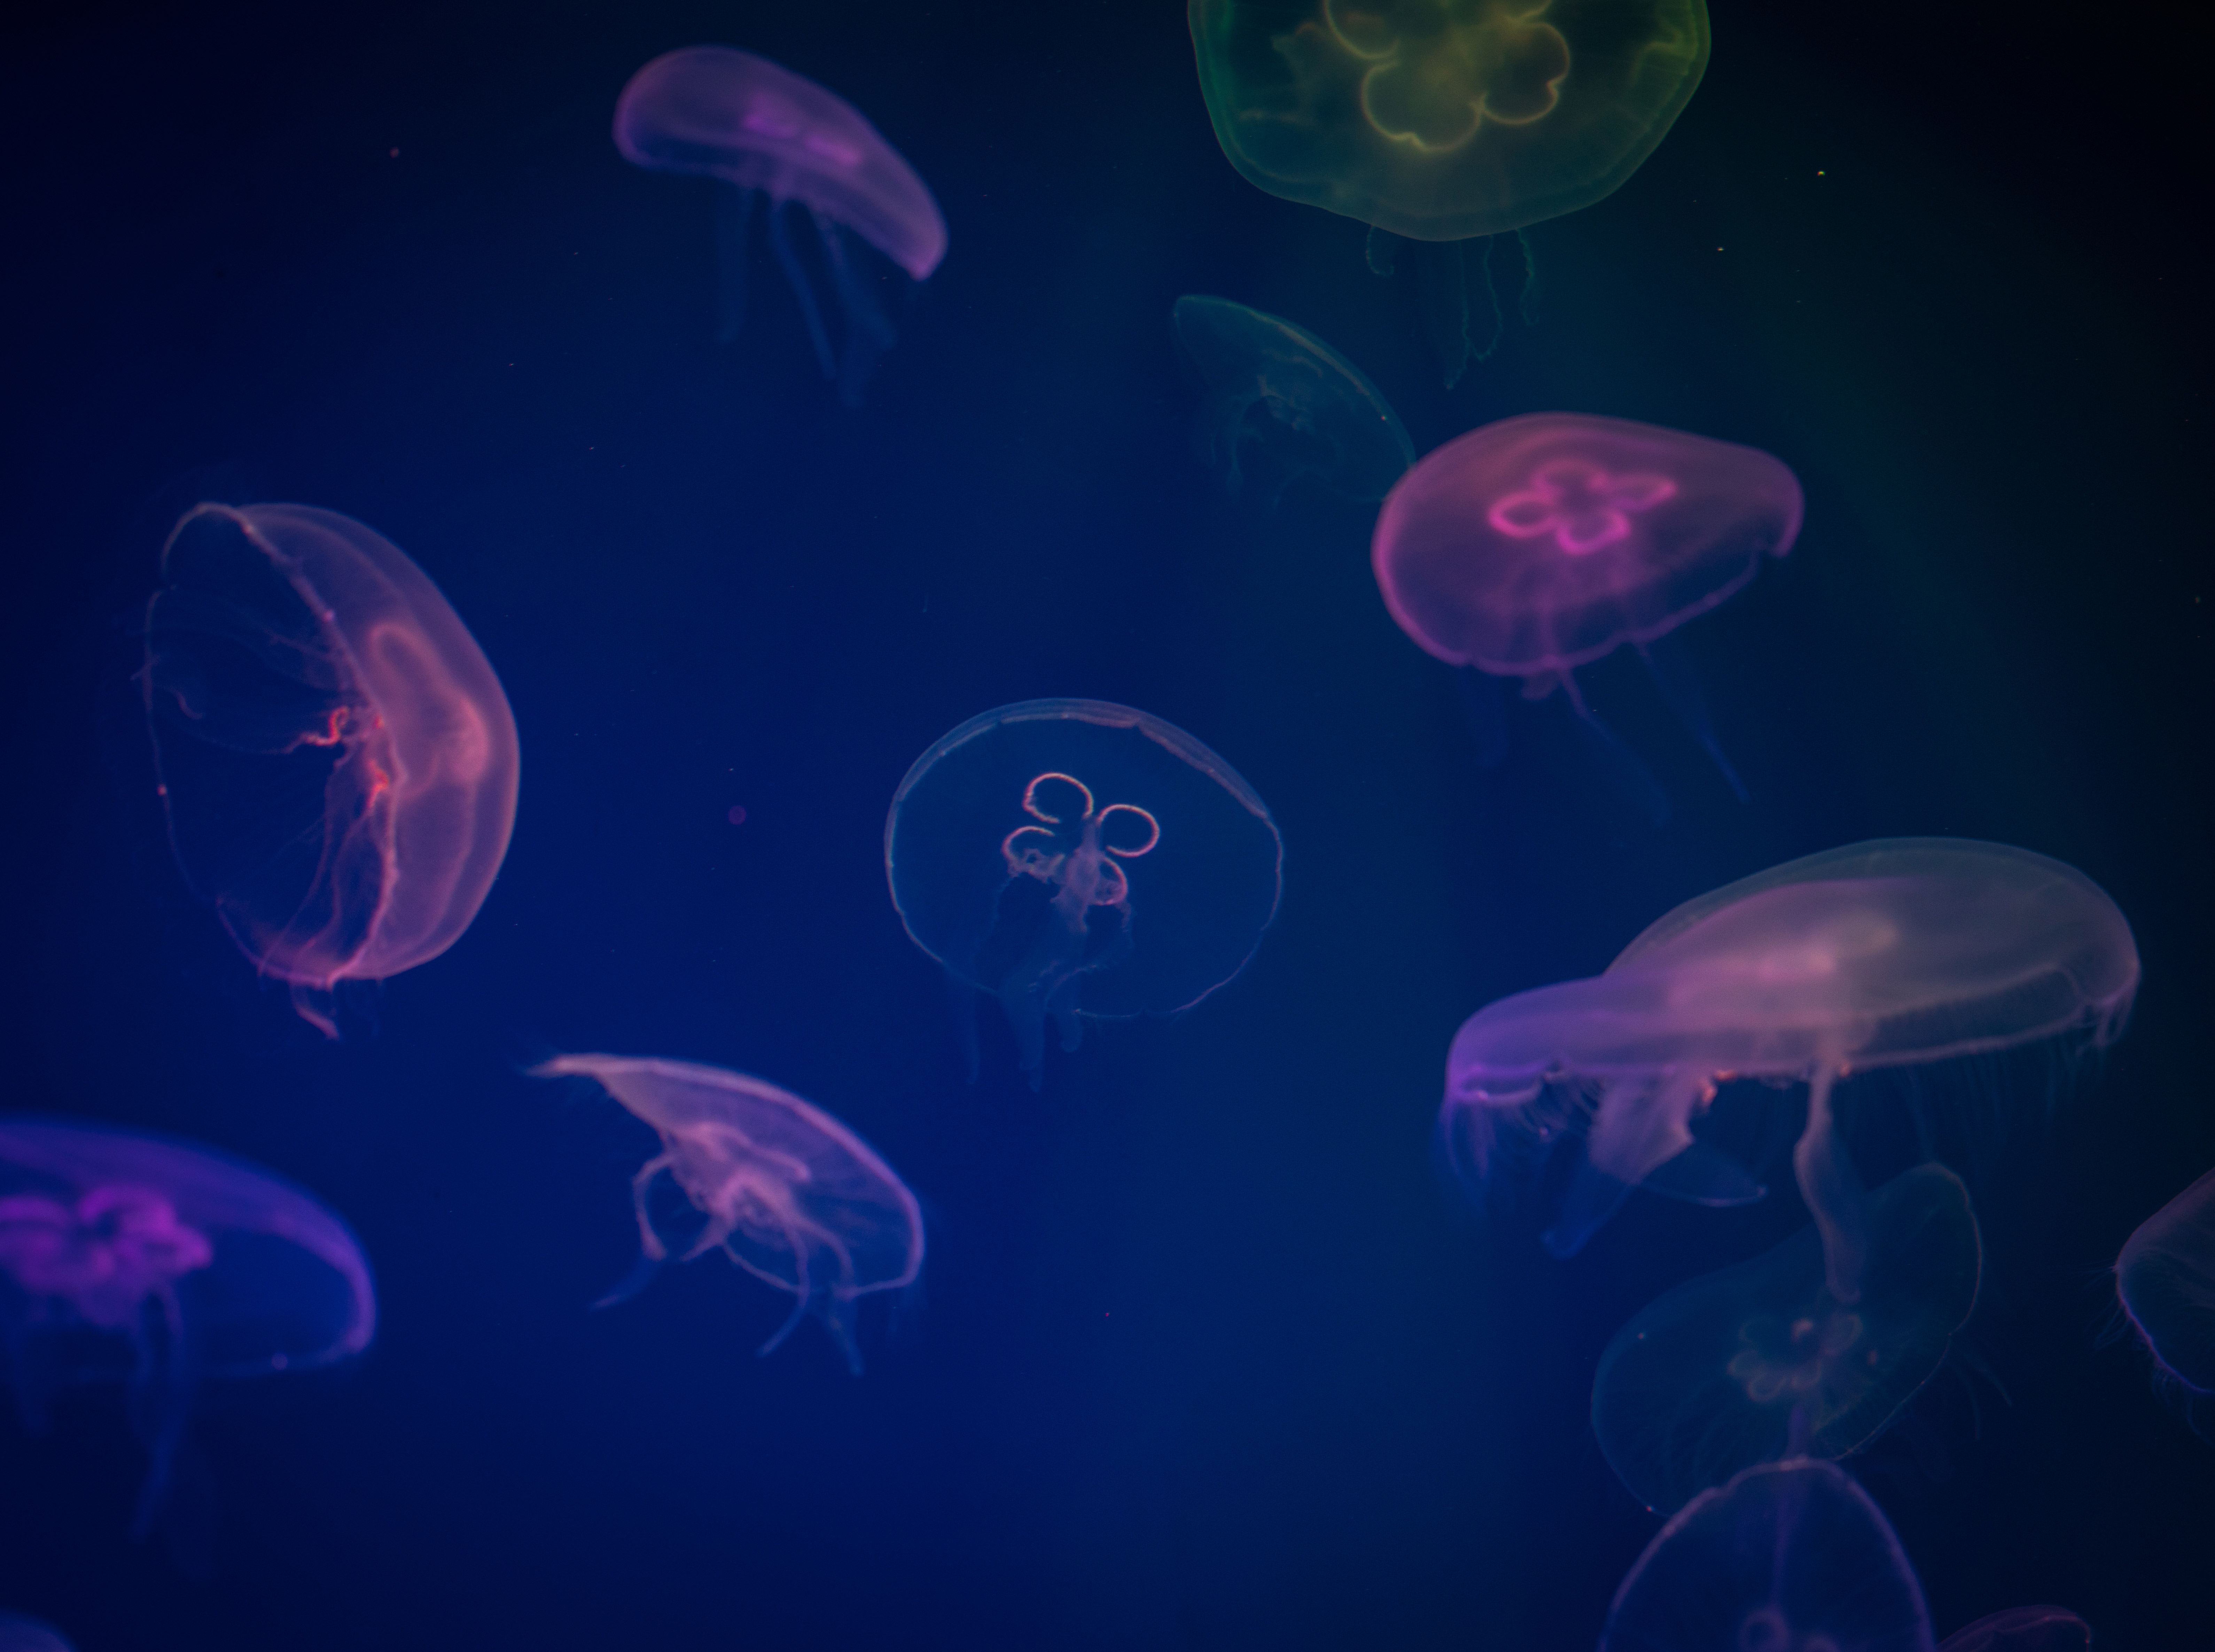 Jellyfish Digital Art, HD Animals, 4k Wallpapers, Images ...